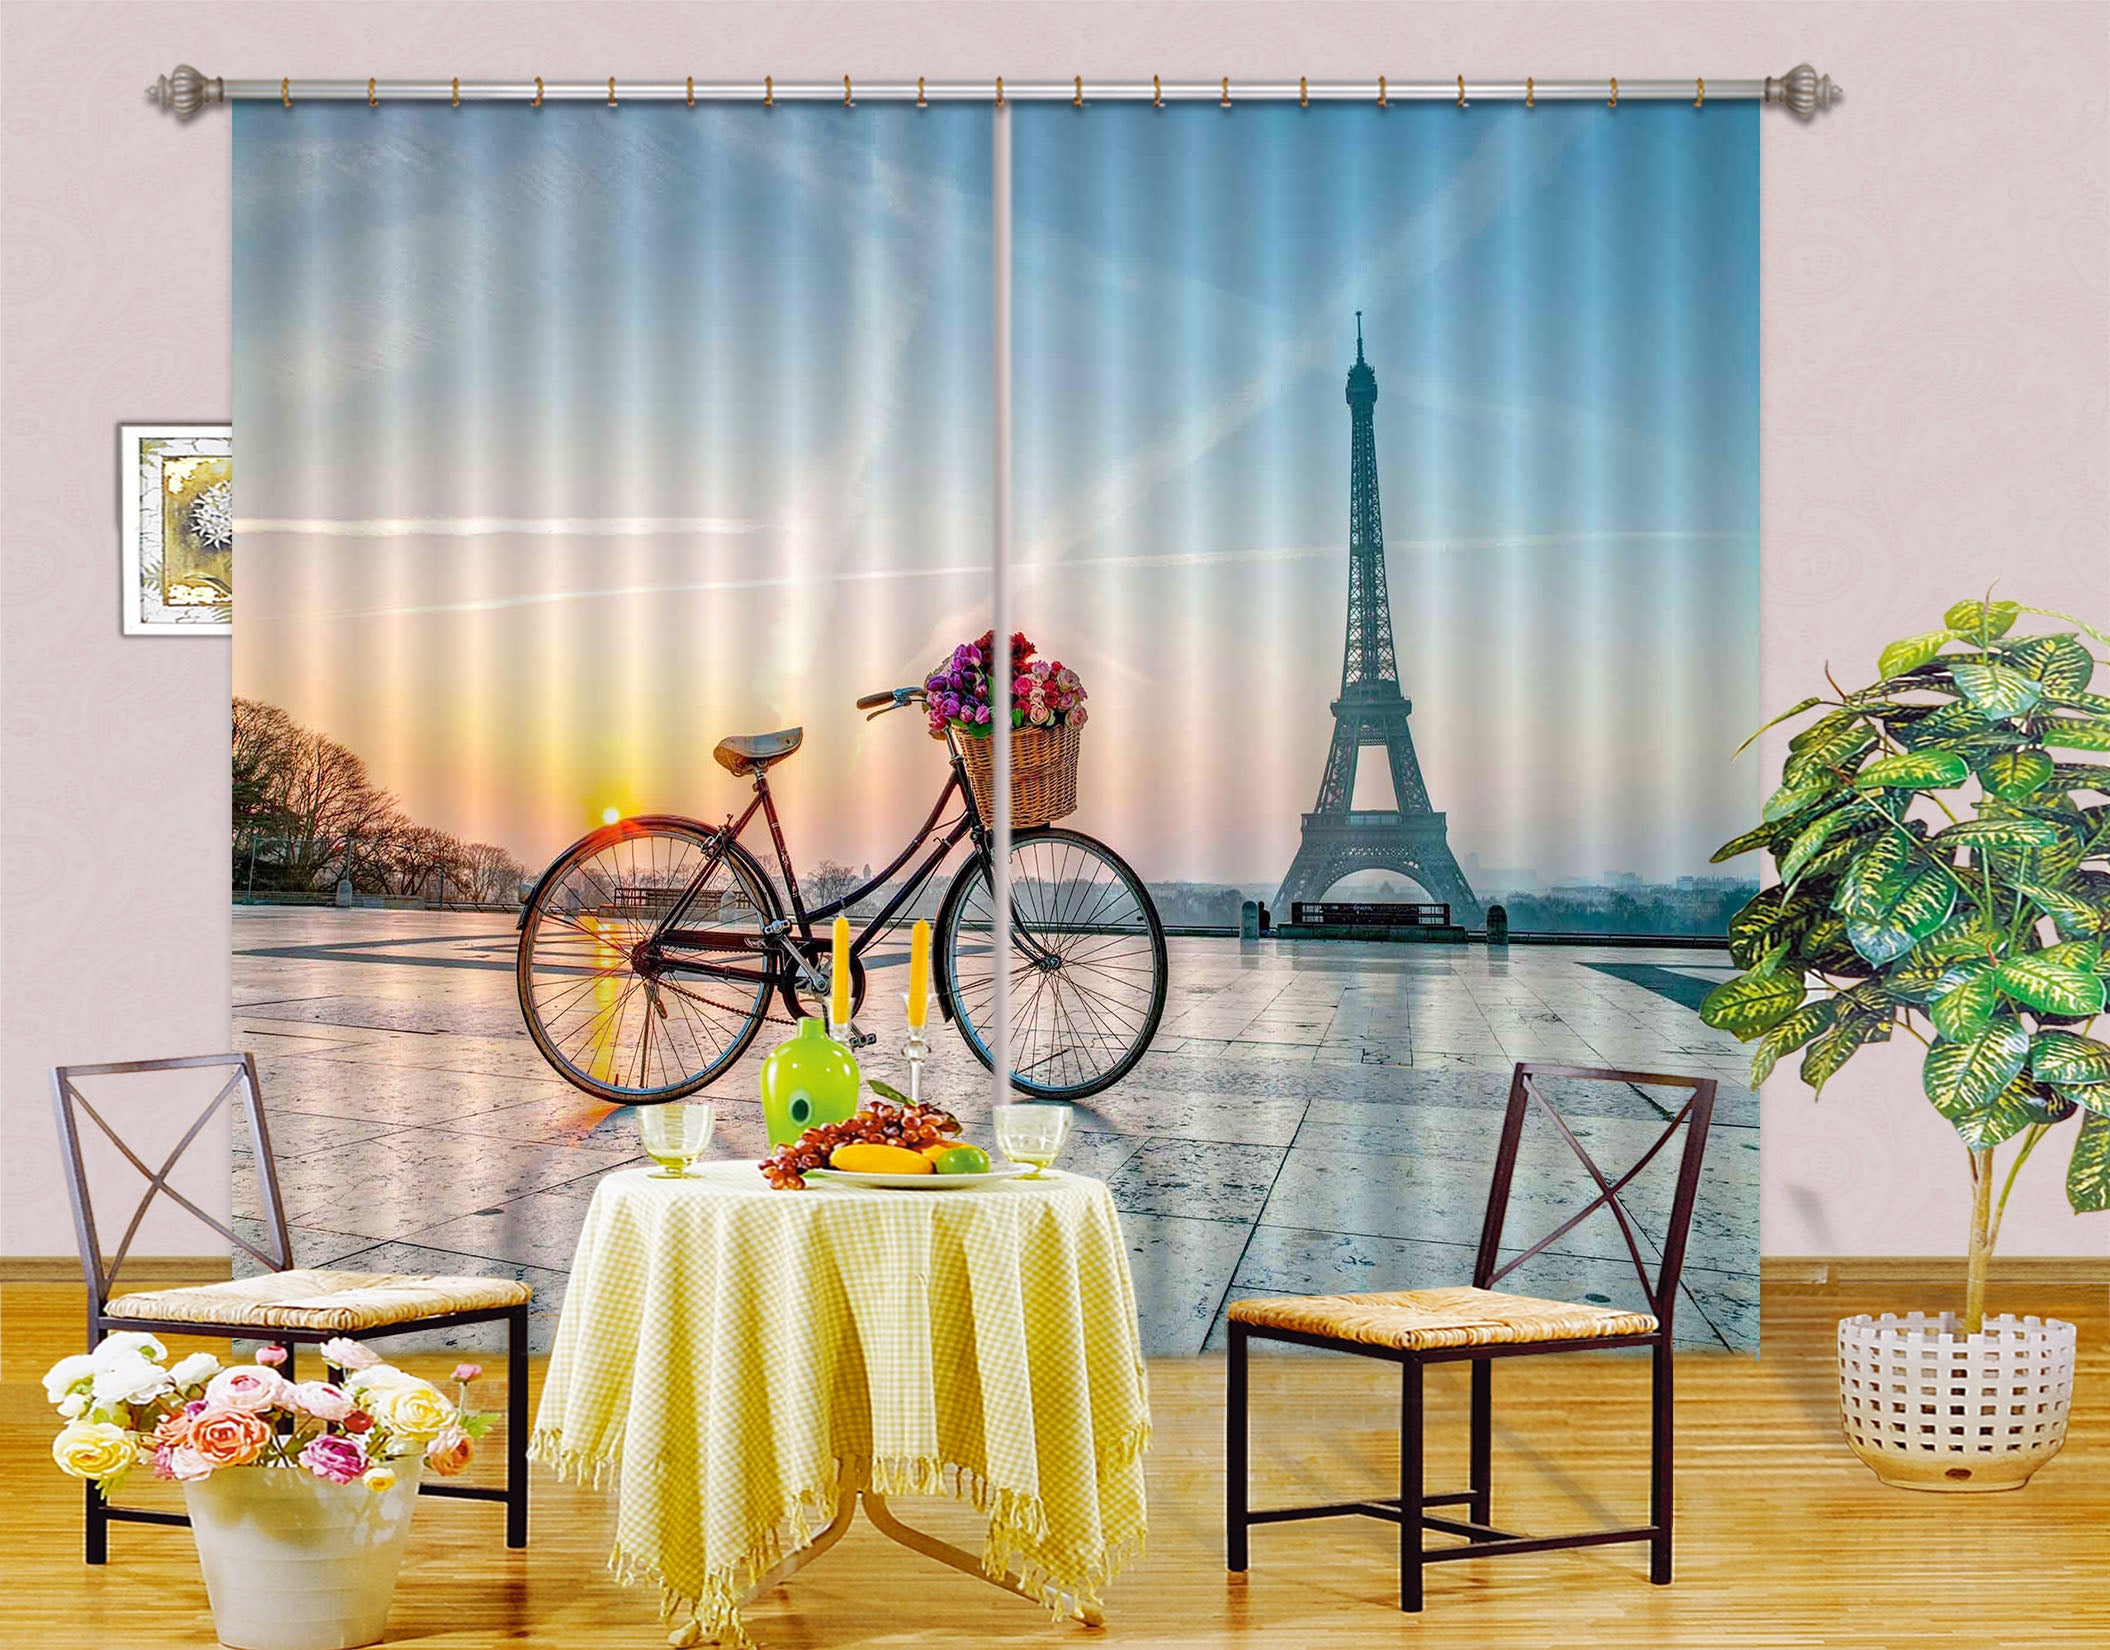 3D Eiffel Tower 004 Assaf Frank Curtain Curtains Drapes